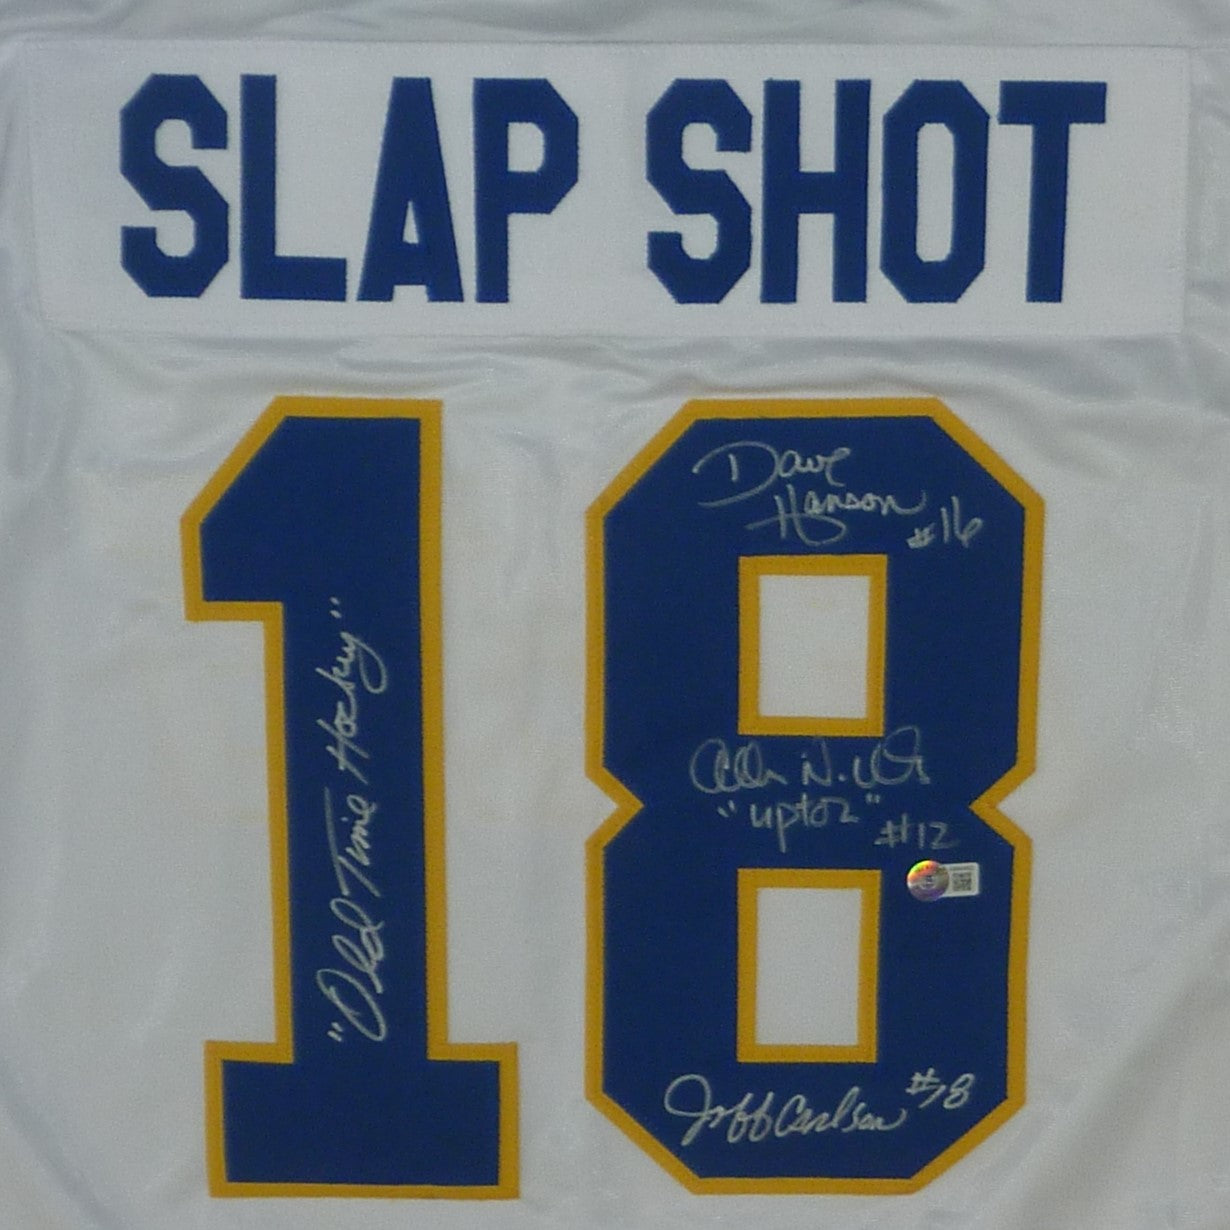 Hanson Brothers Autographed Slap Shot Movie Chiefs (White #18) Custom Hockey Jersey w/ "Old Time Hockey" - Beckett